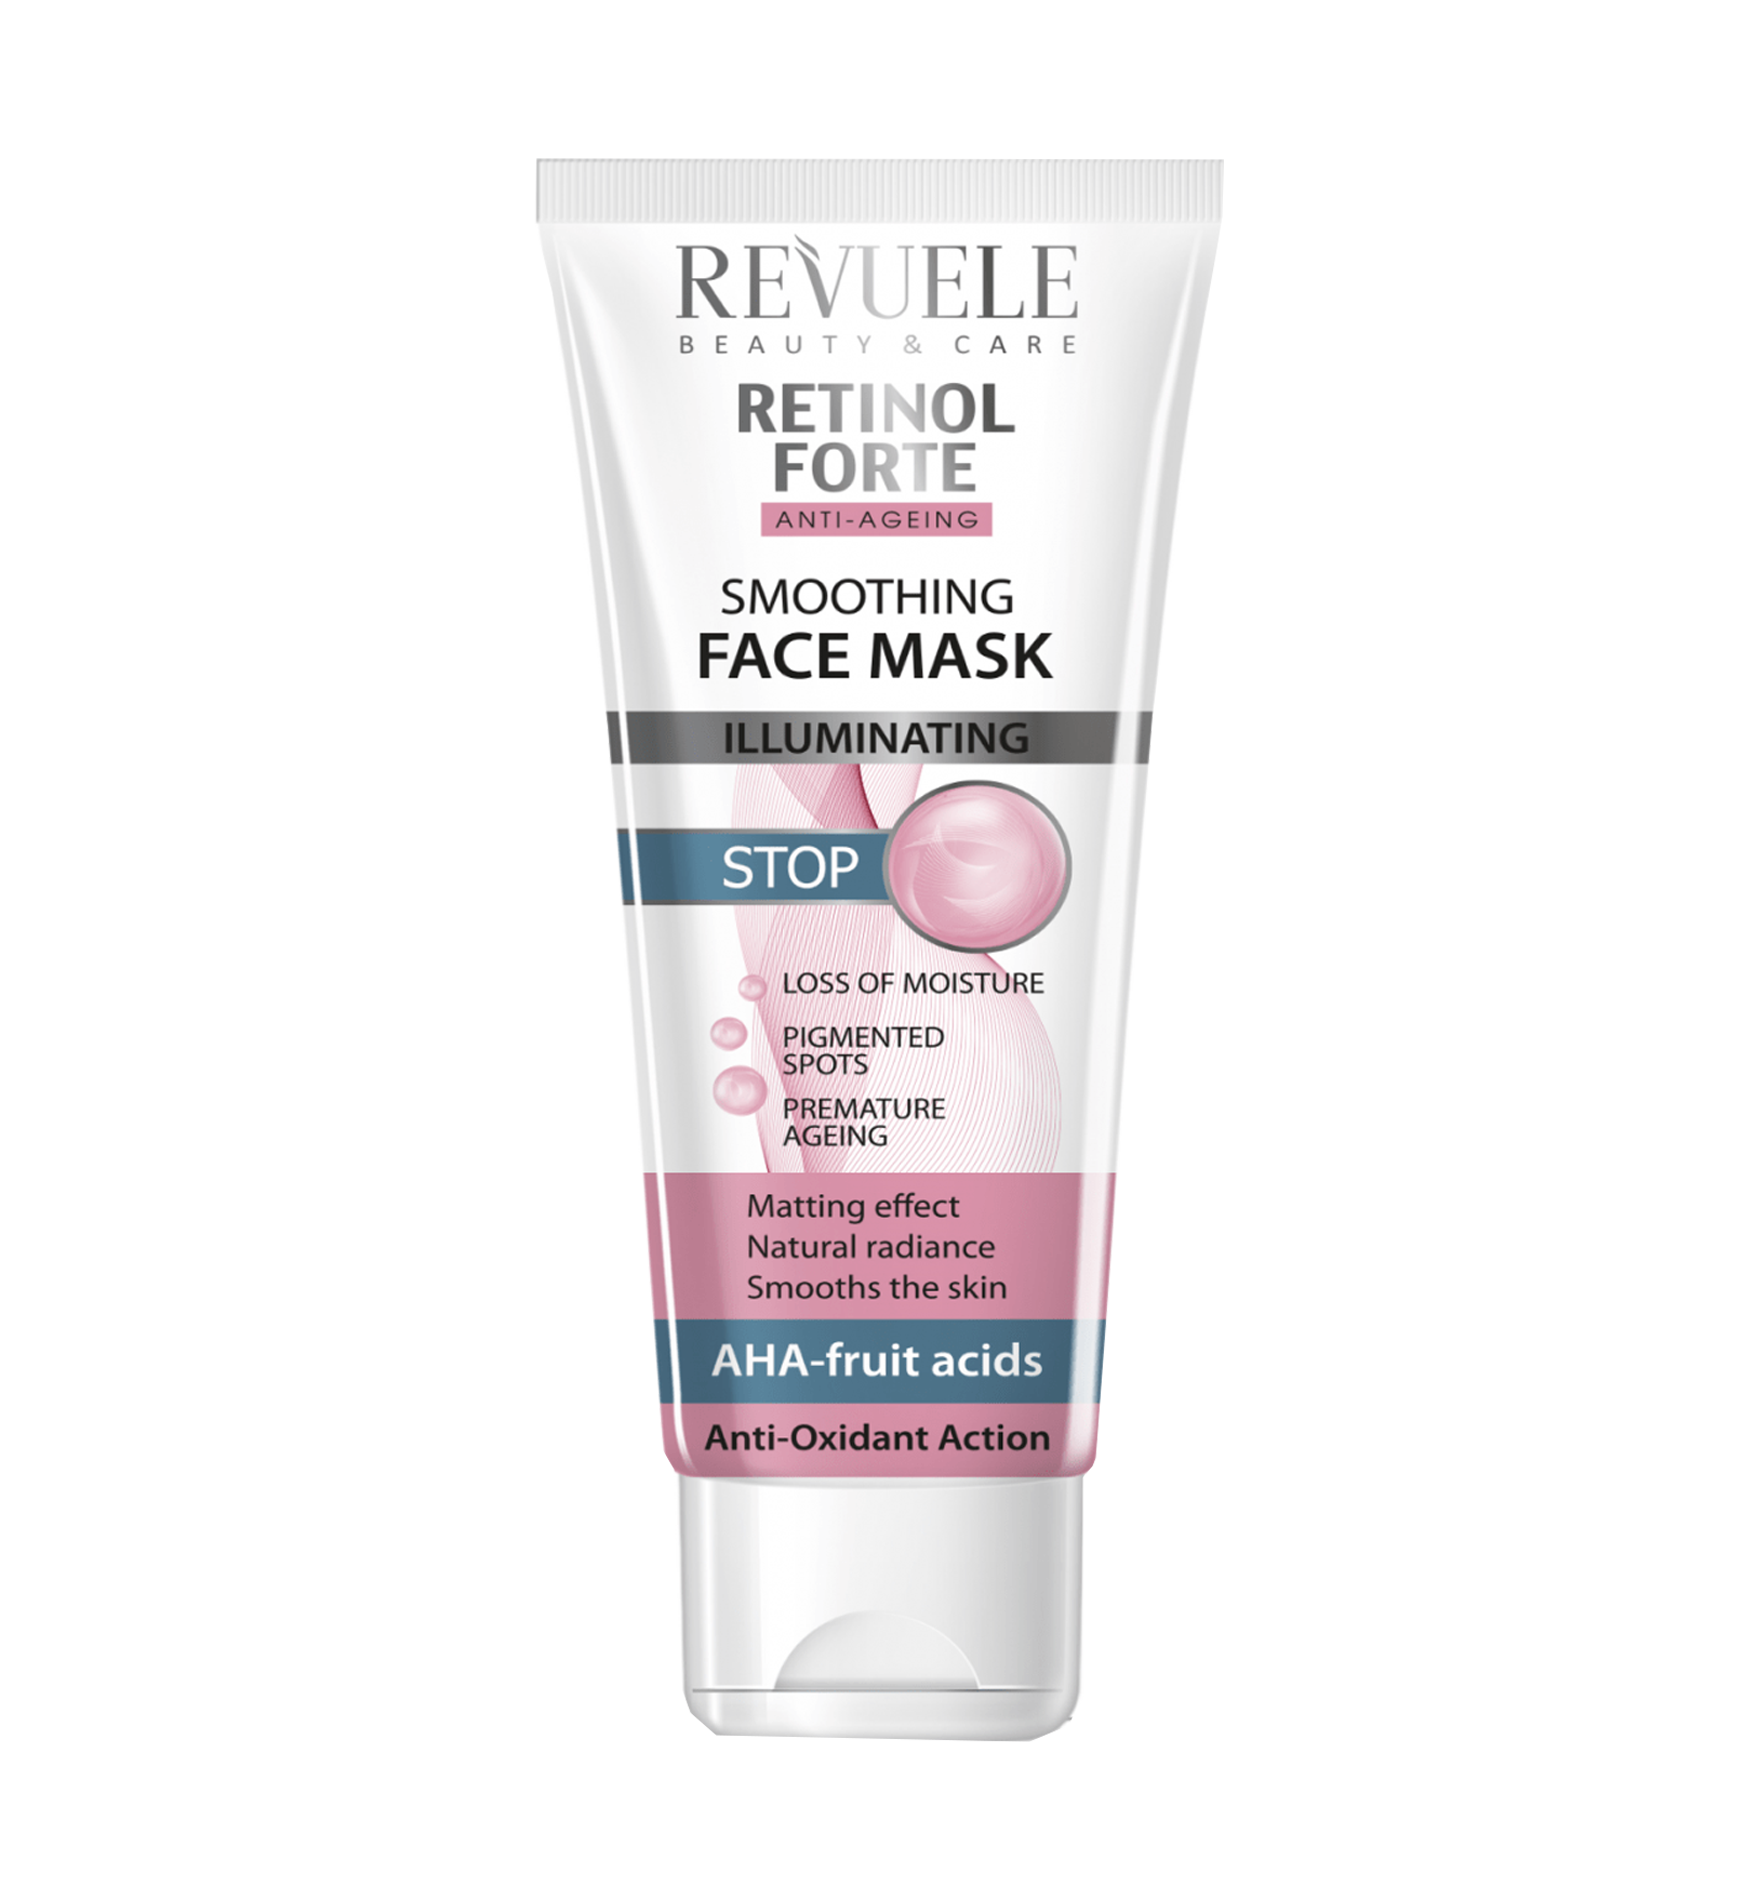 Revuele Retinol Forte - smoothing face mask